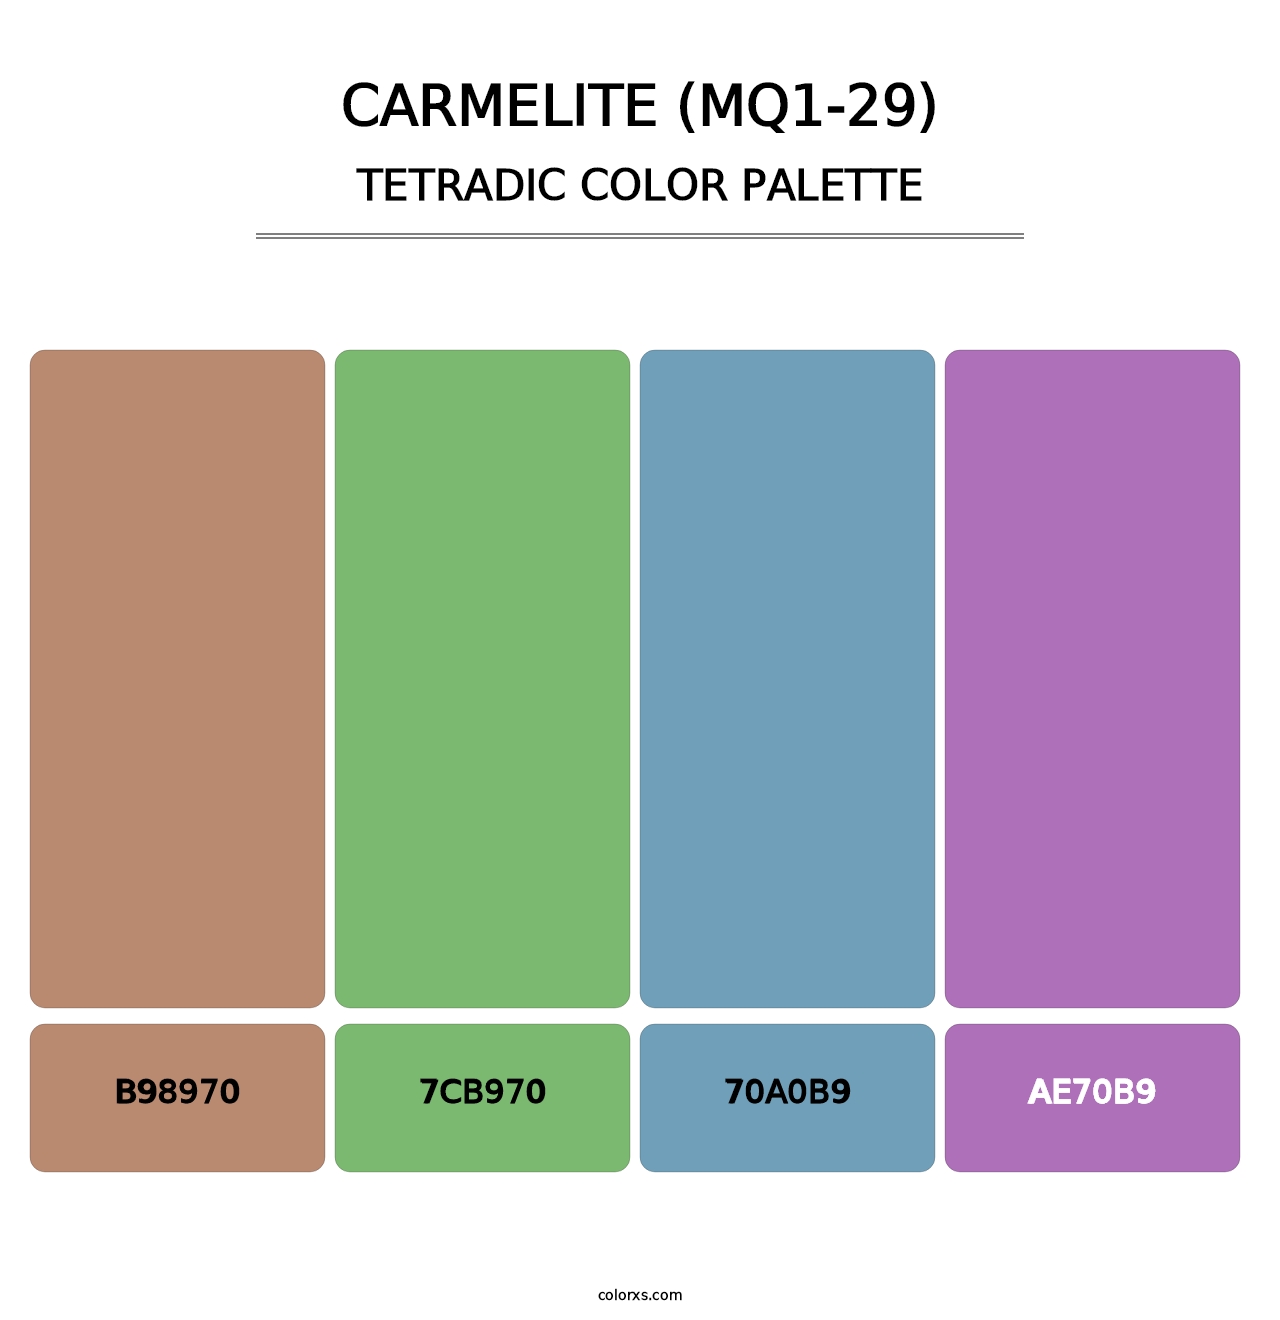 Carmelite (MQ1-29) - Tetradic Color Palette